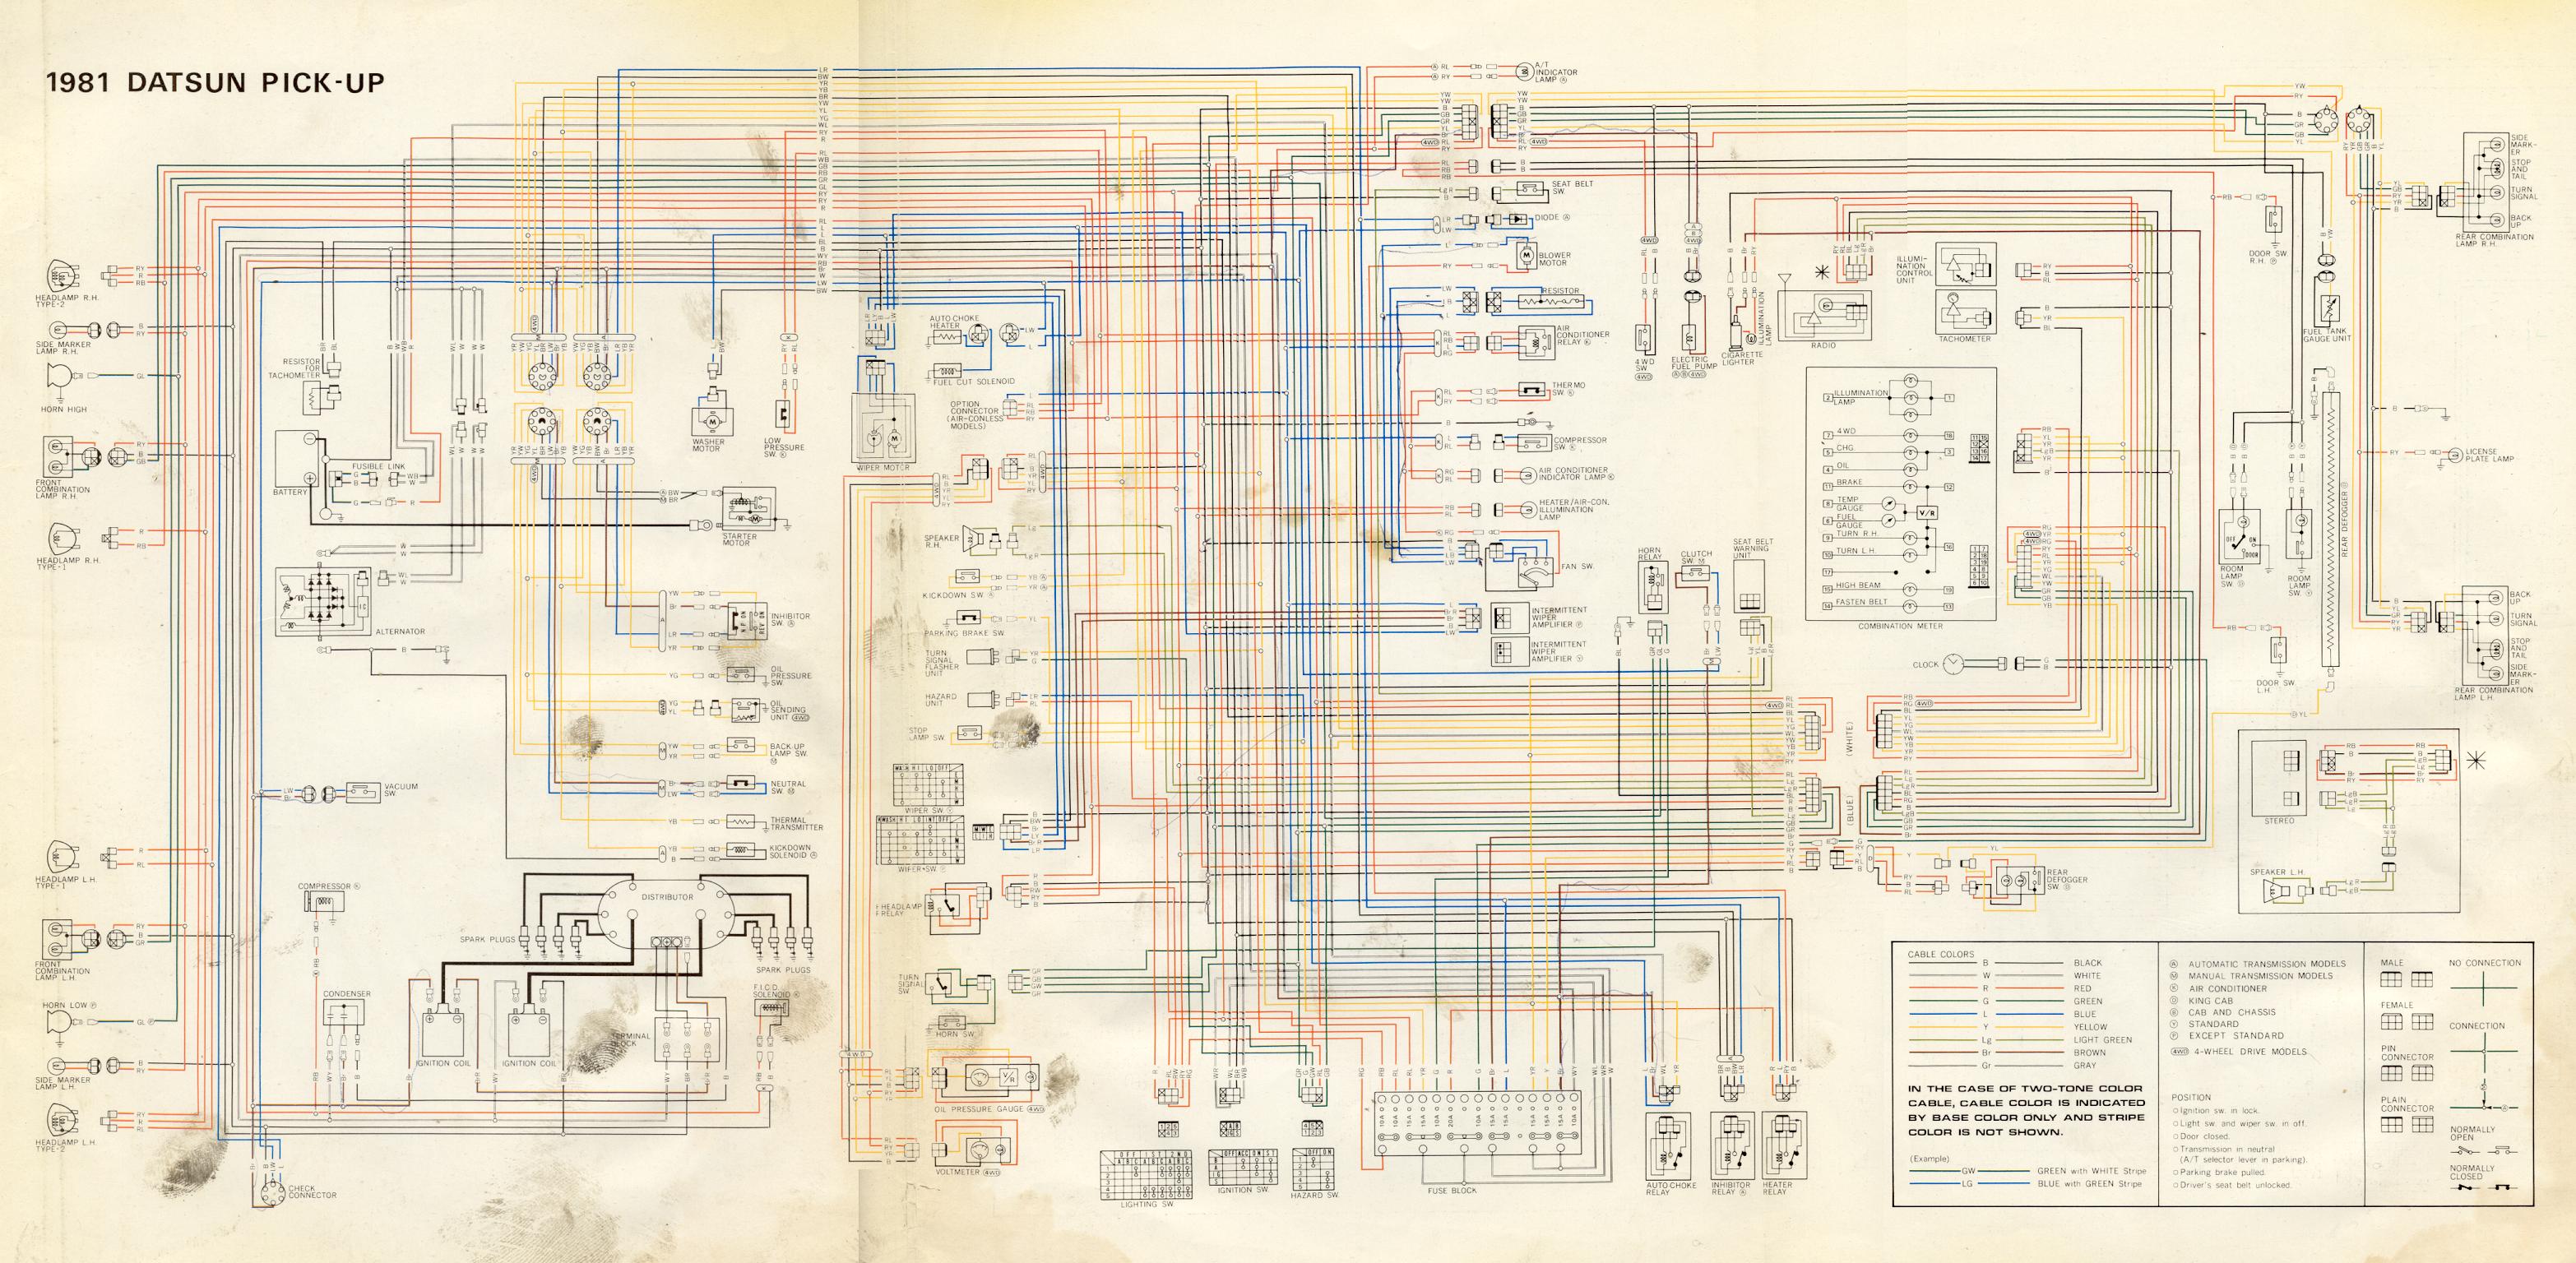 1978 datsun 280z wiring diagram